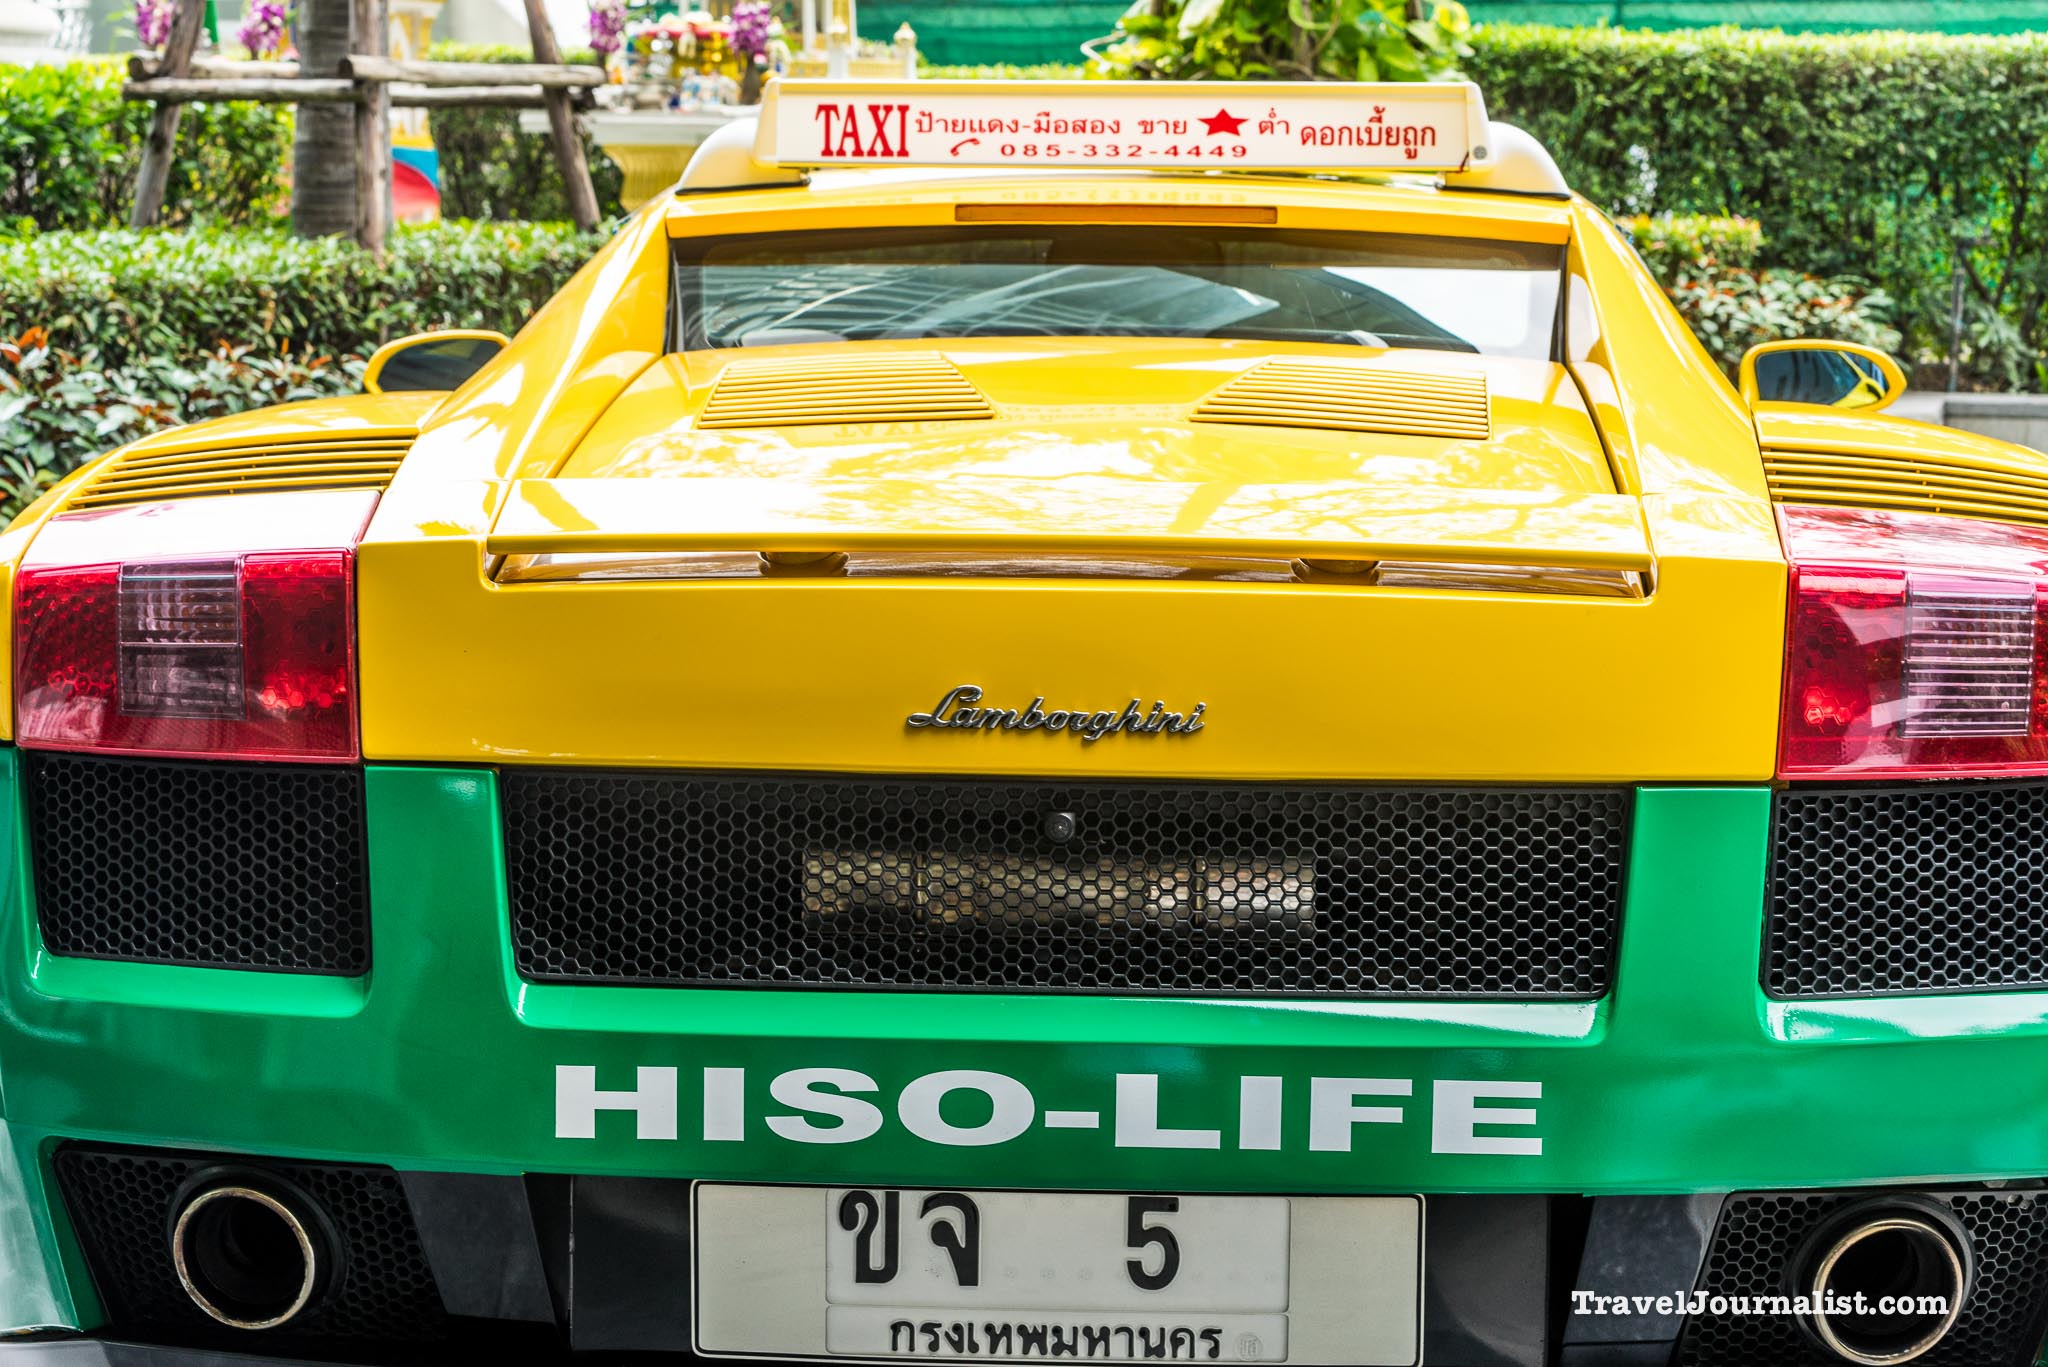 Lamborghini-Taxi-Meter-HiSo-Life-Bangkok-Thailand-5